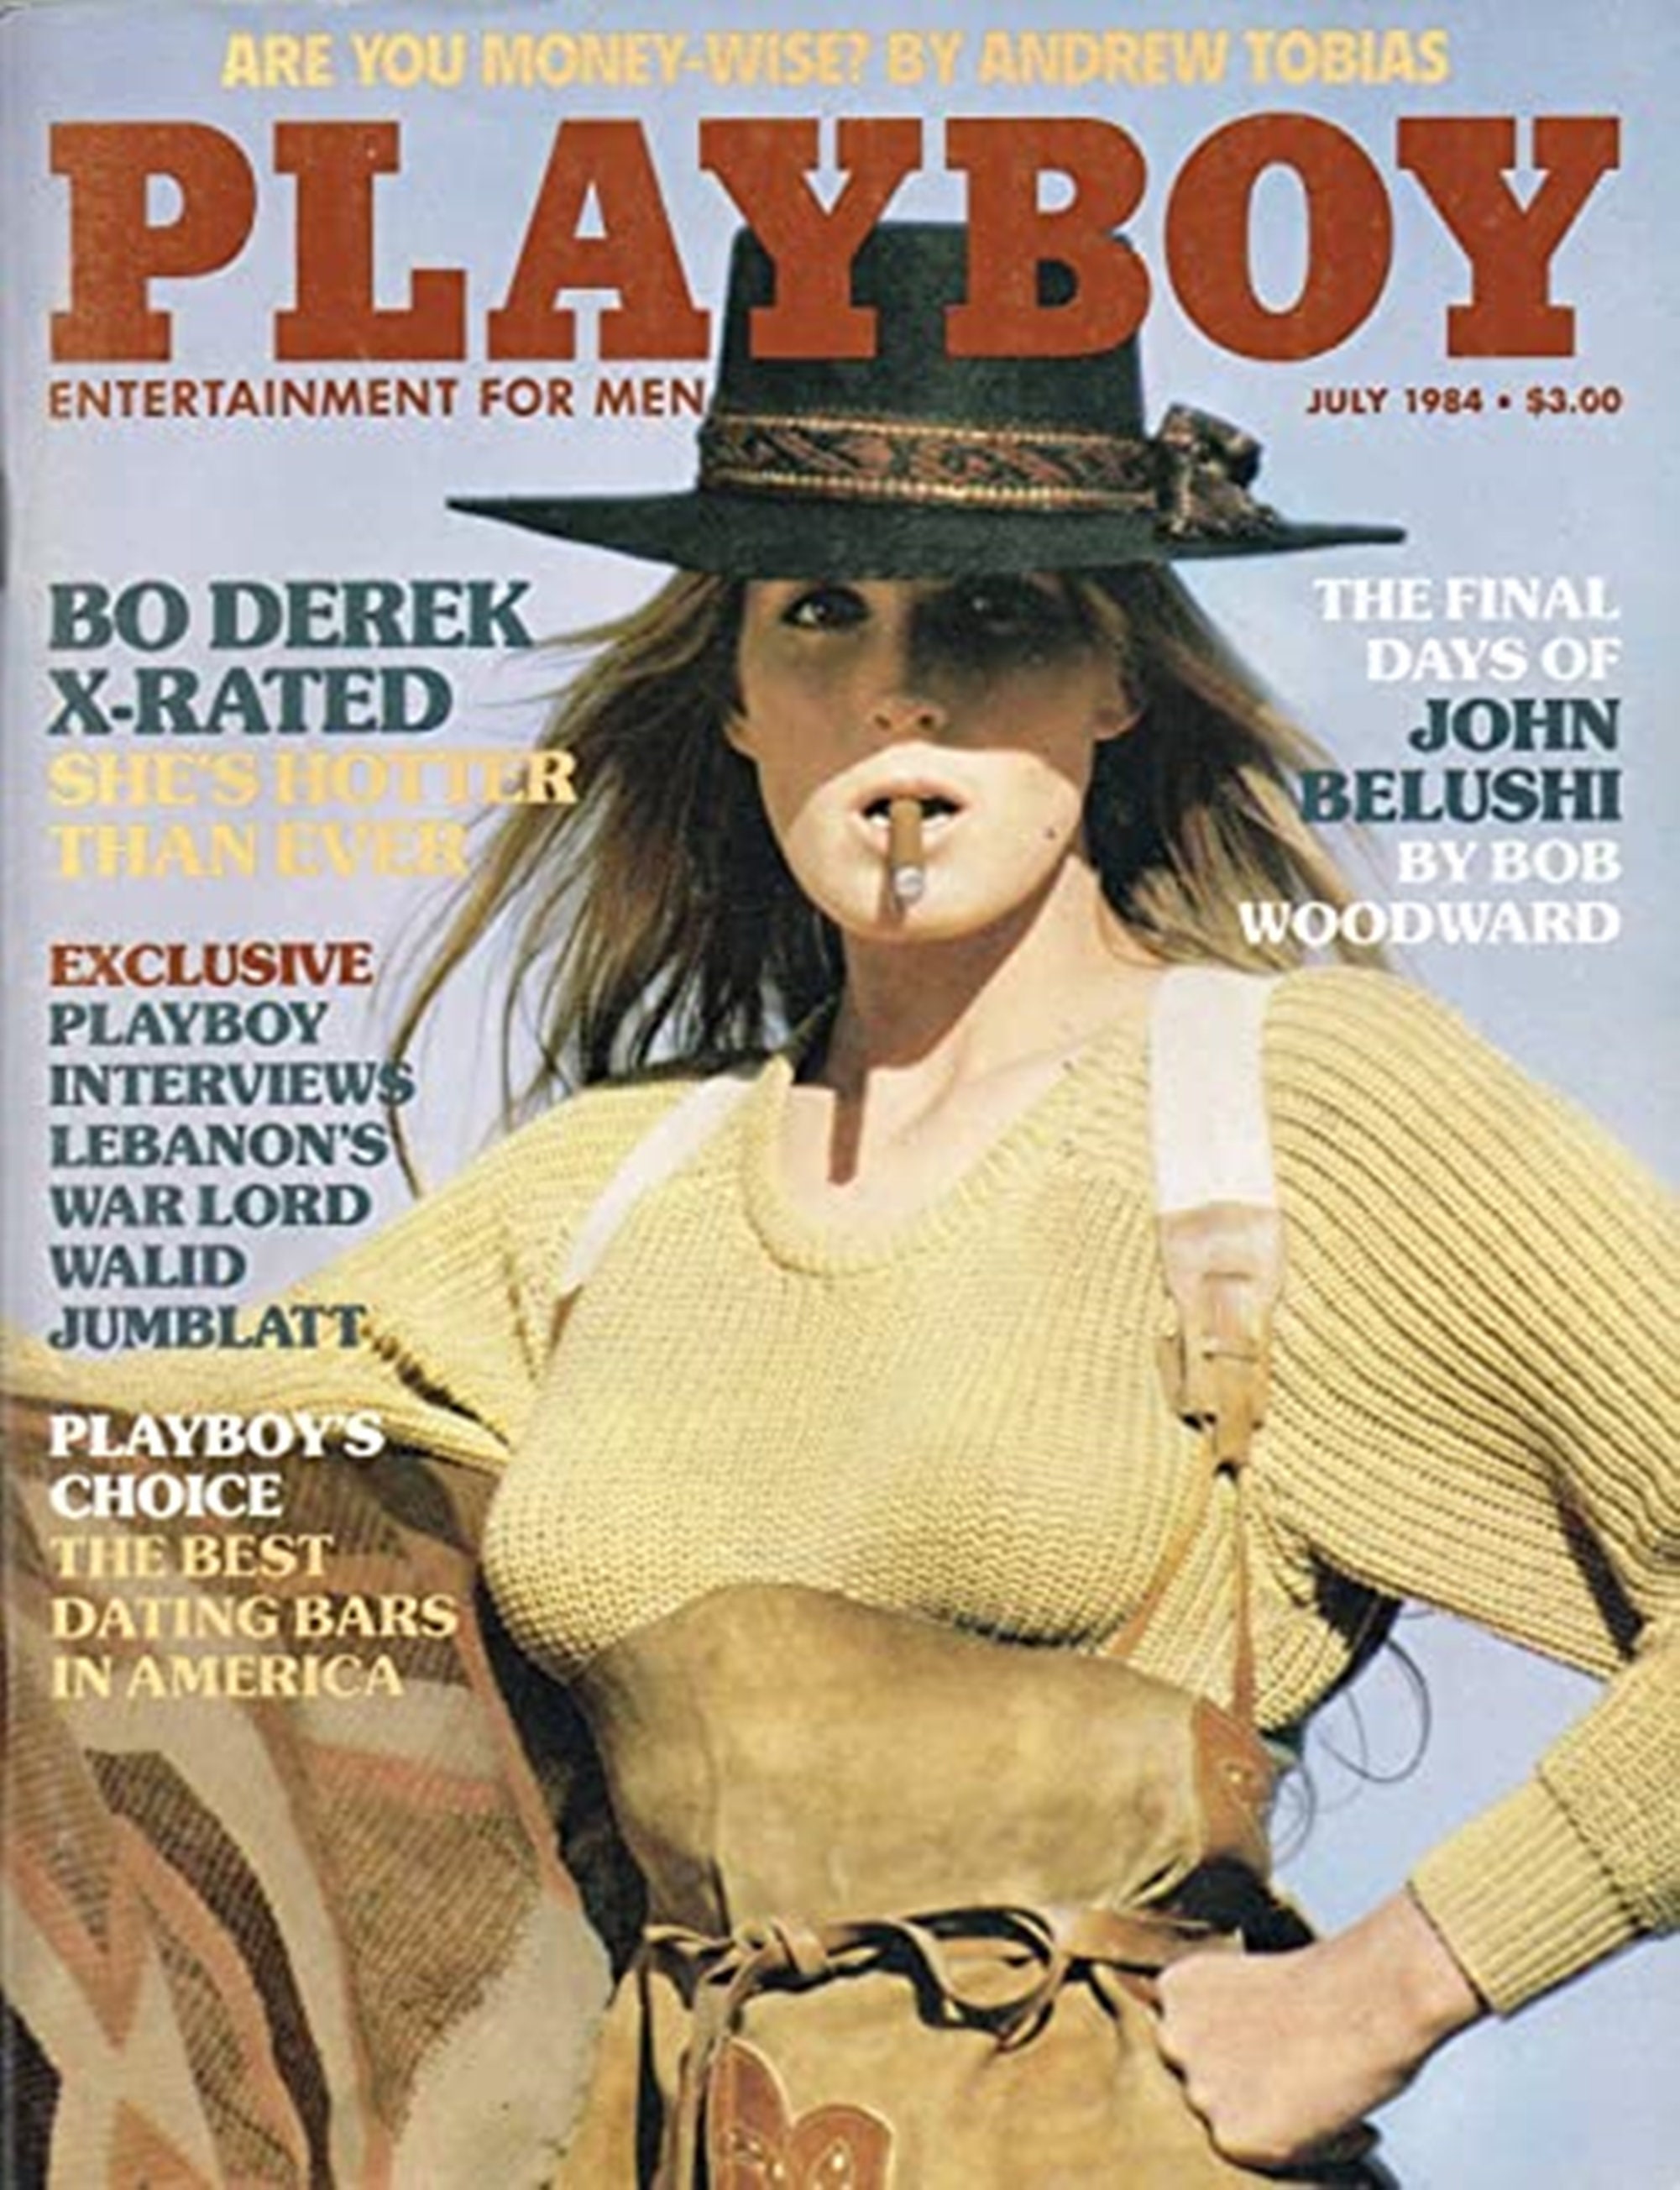 Playboy July 1984 POM Liz Stewart BO DEREK John Belushi Walid Jumblatt interview | eBay